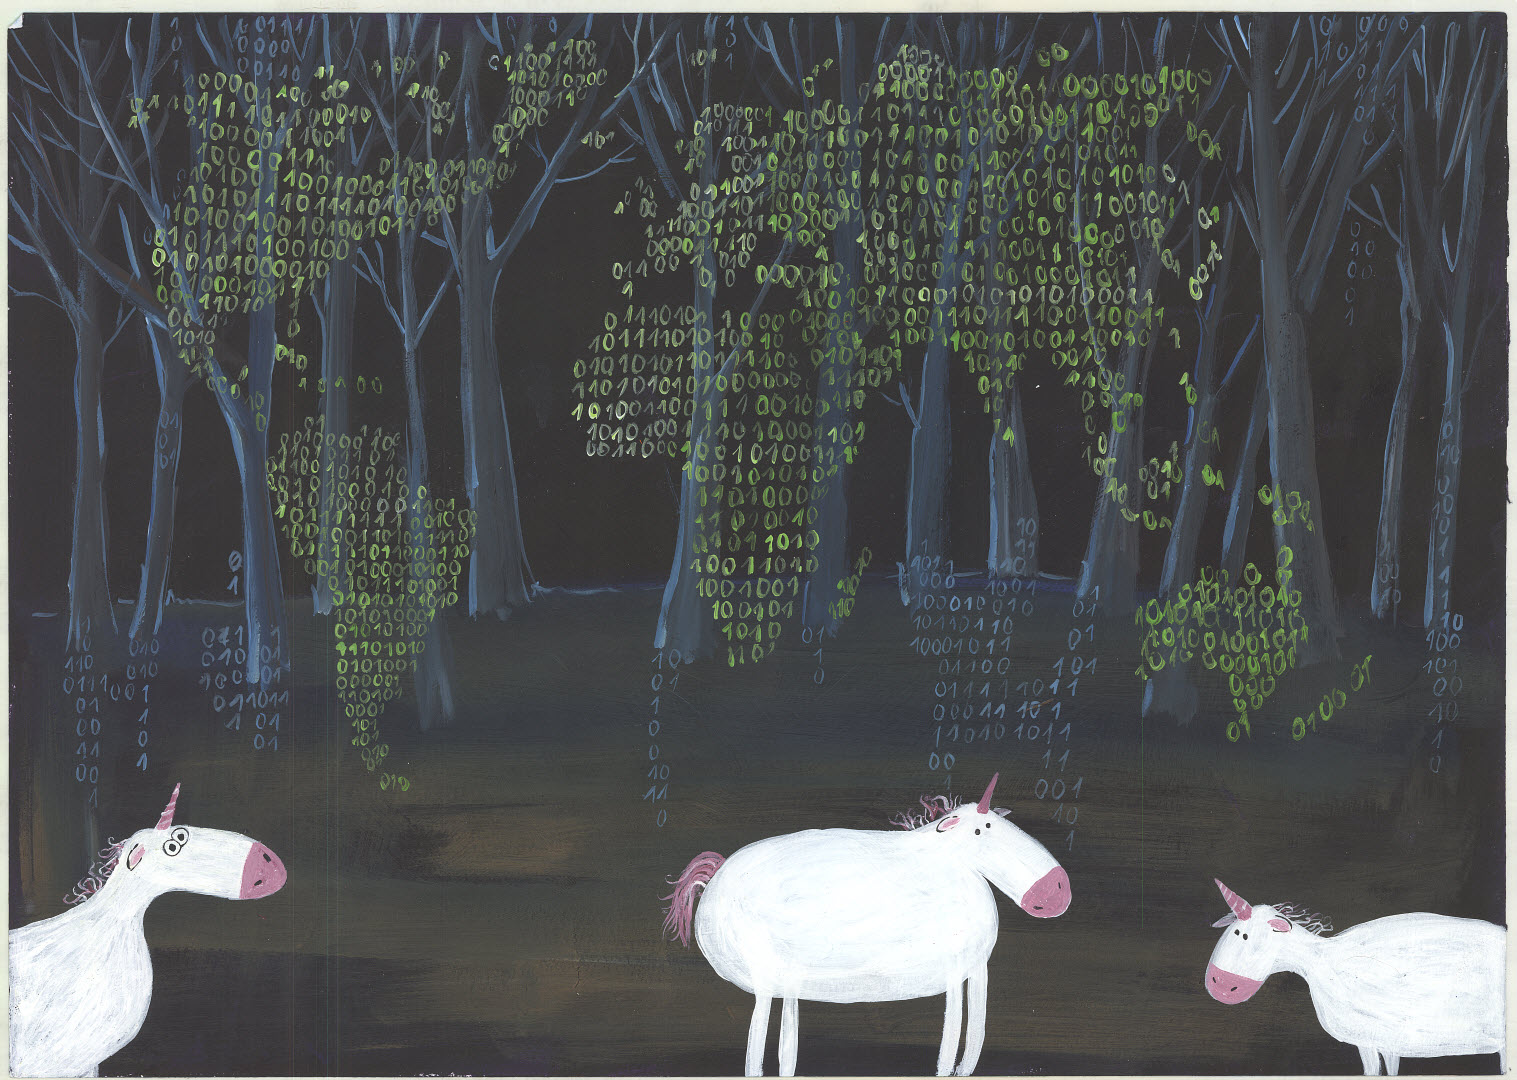 Shows unicorns, trees and binary coding